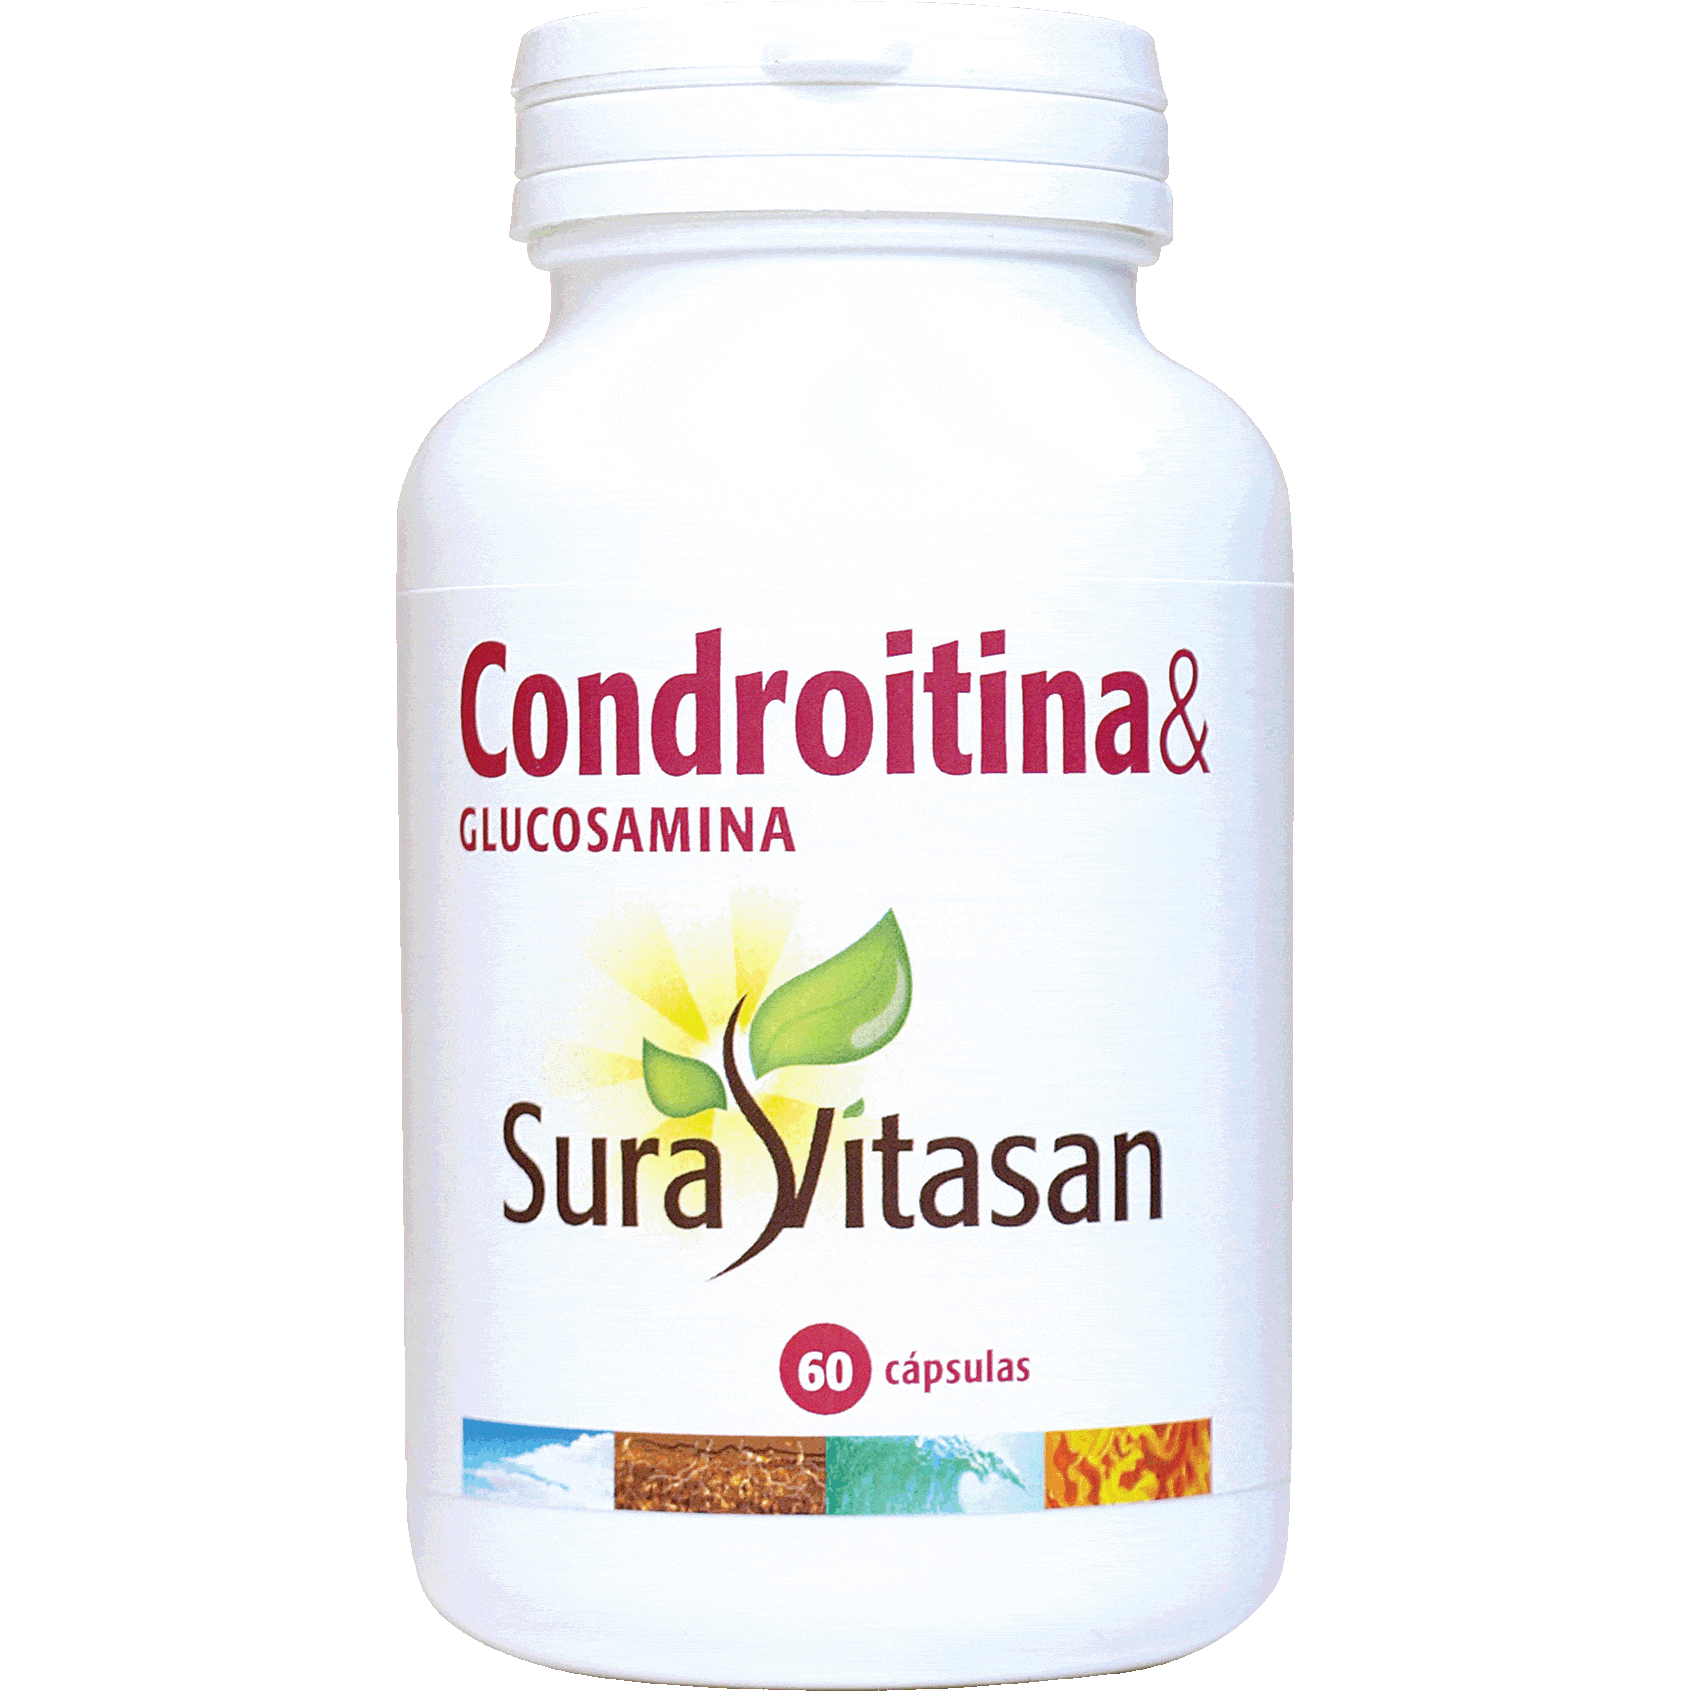 Condroitina & Glucosamina 60 Capsulas | Sura Vitasan - Dietetica Ferrer